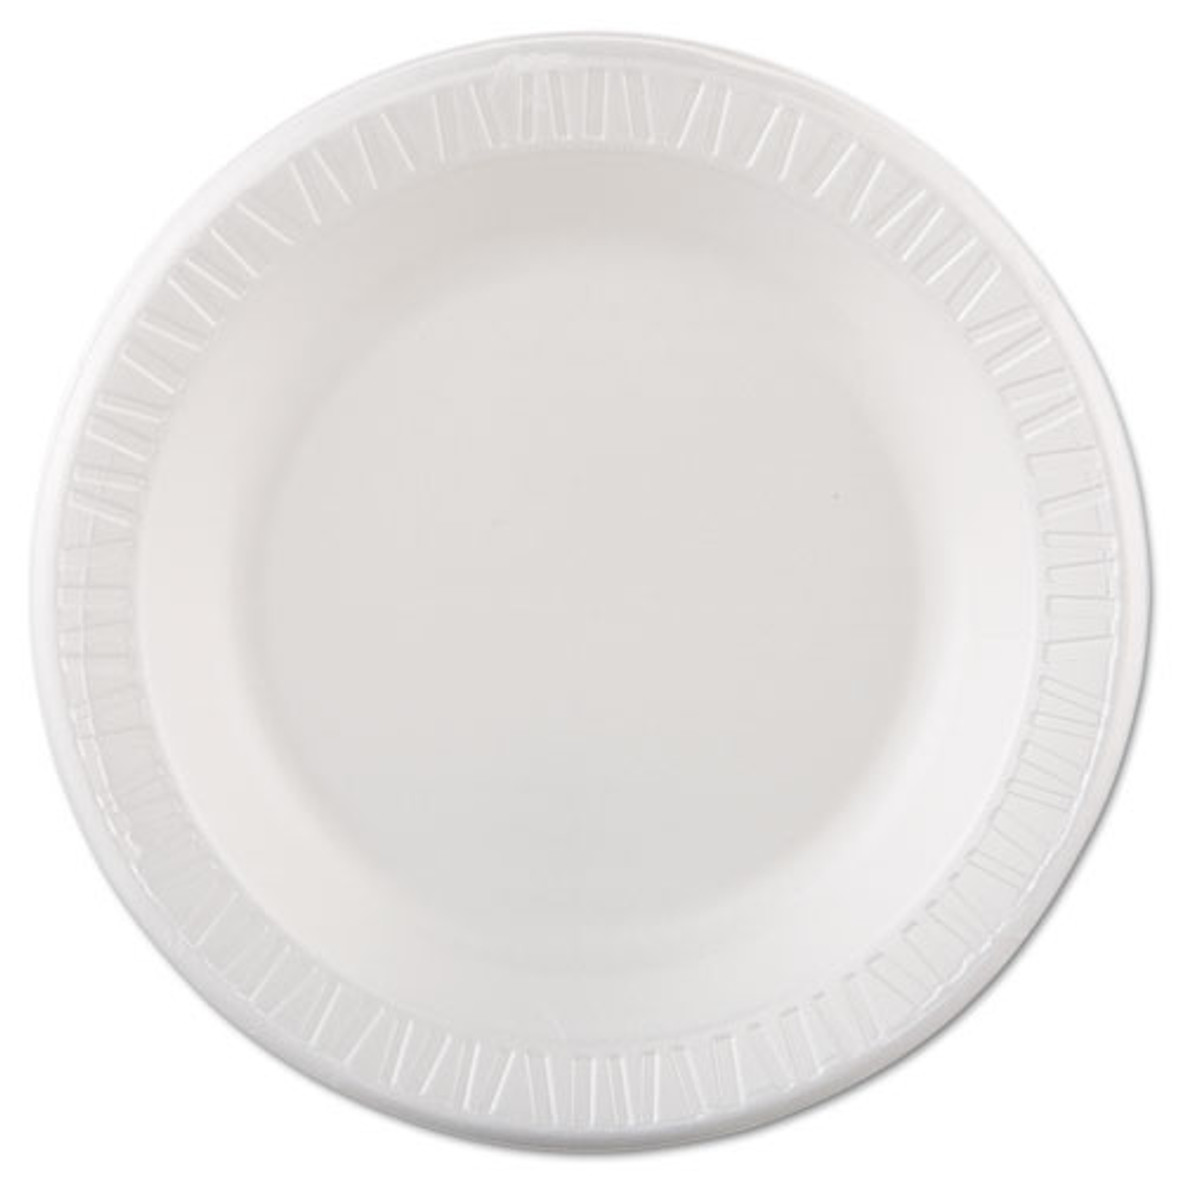 Dart Quiet Classic Laminated Foam Dinnerware, Plate, 10.25" Dia, White, 125/pack, 4 Packs/carton